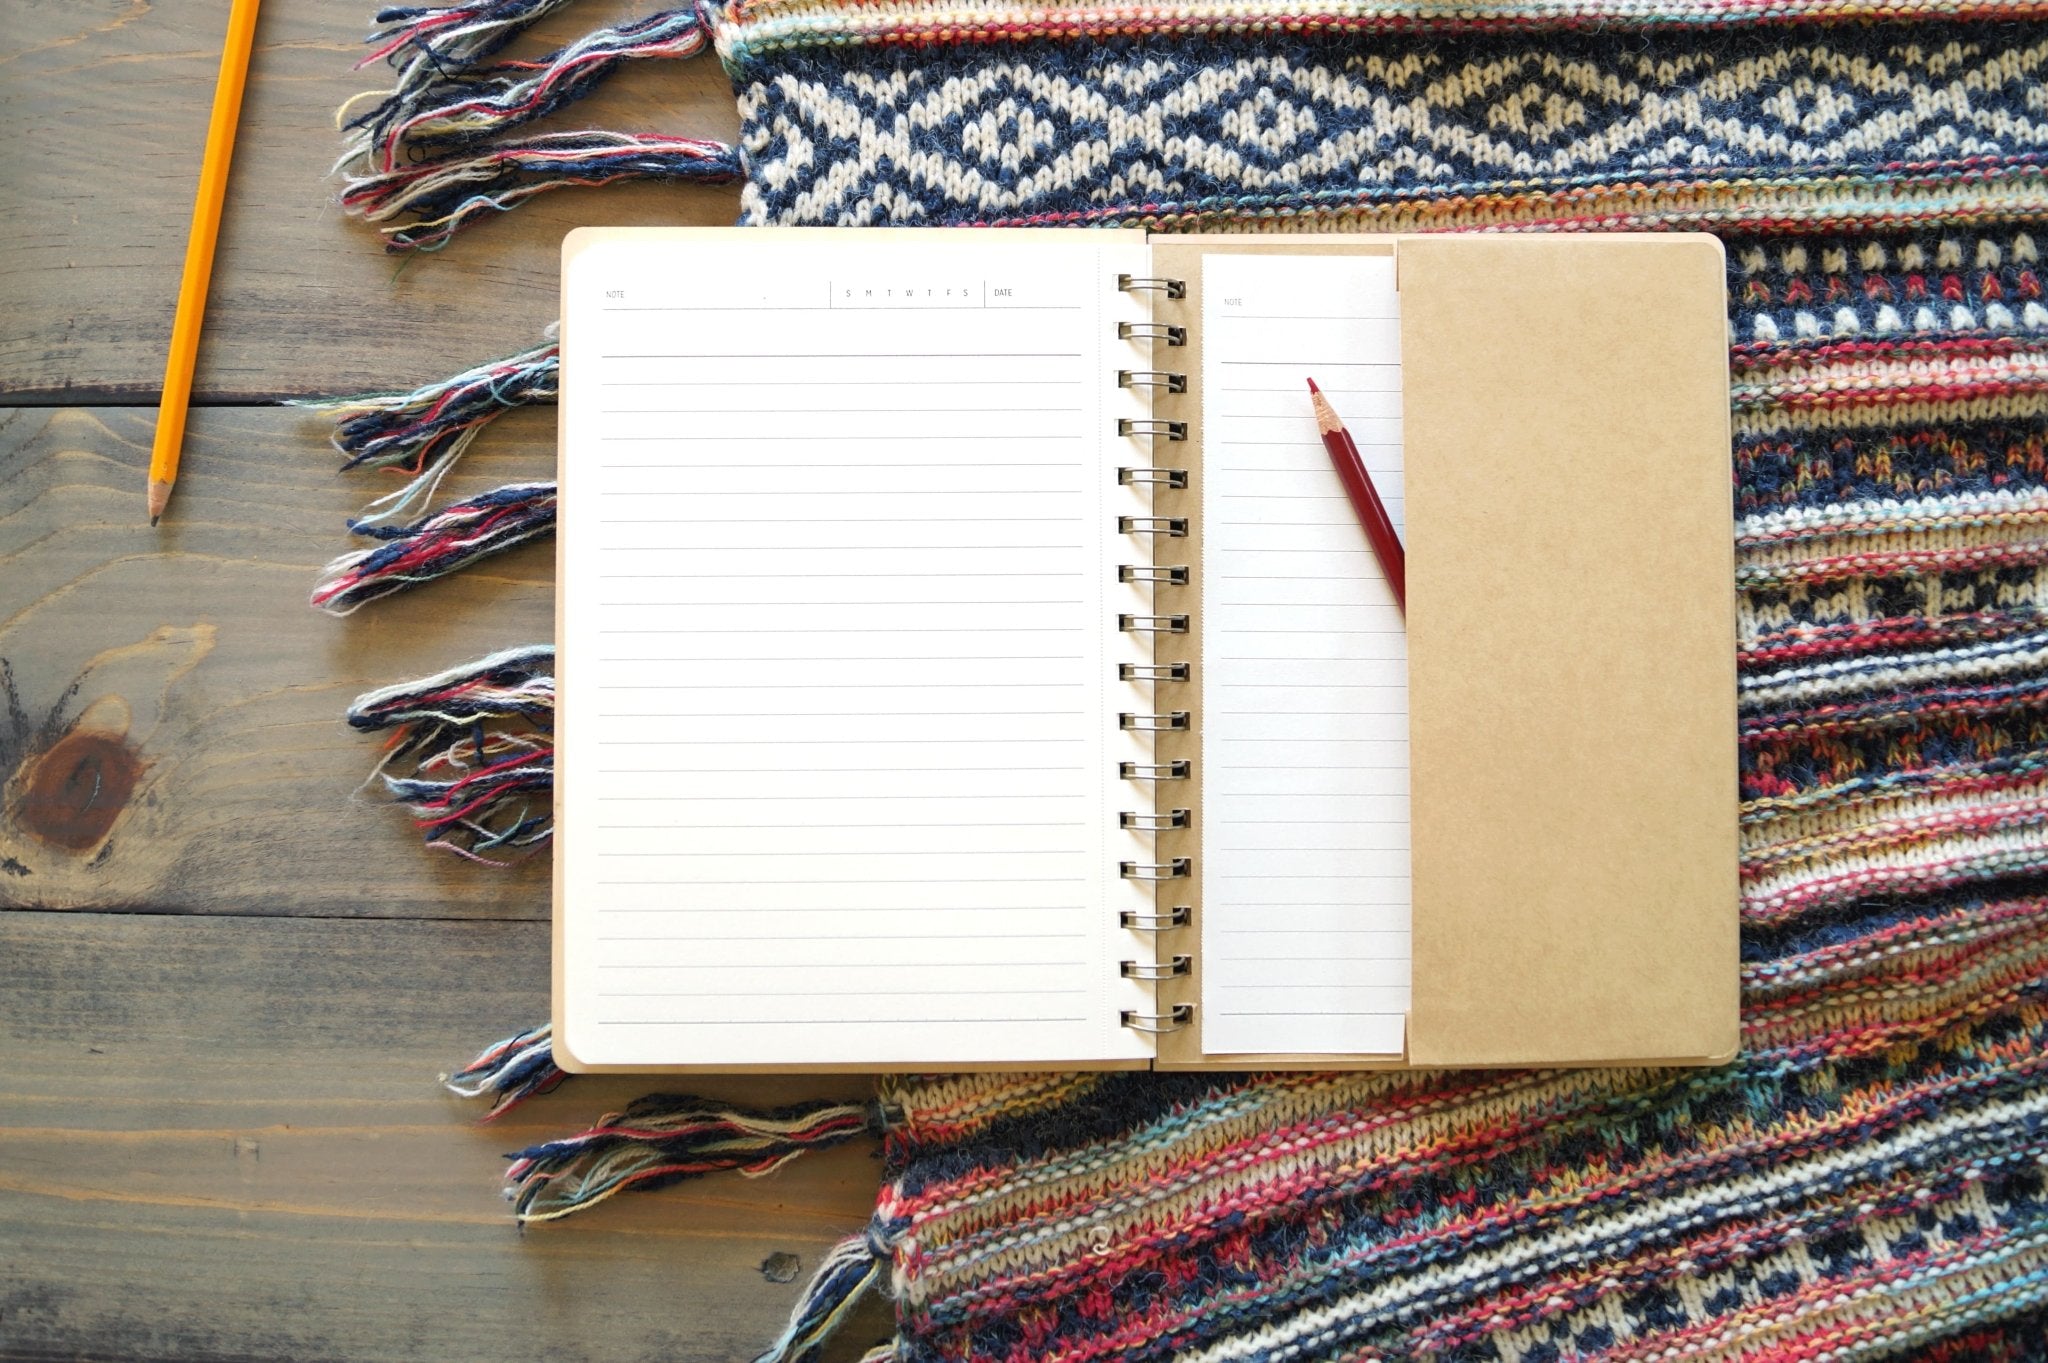 Mountain Sunrise Wood Spiral Notebook - Notebooks & Notepads